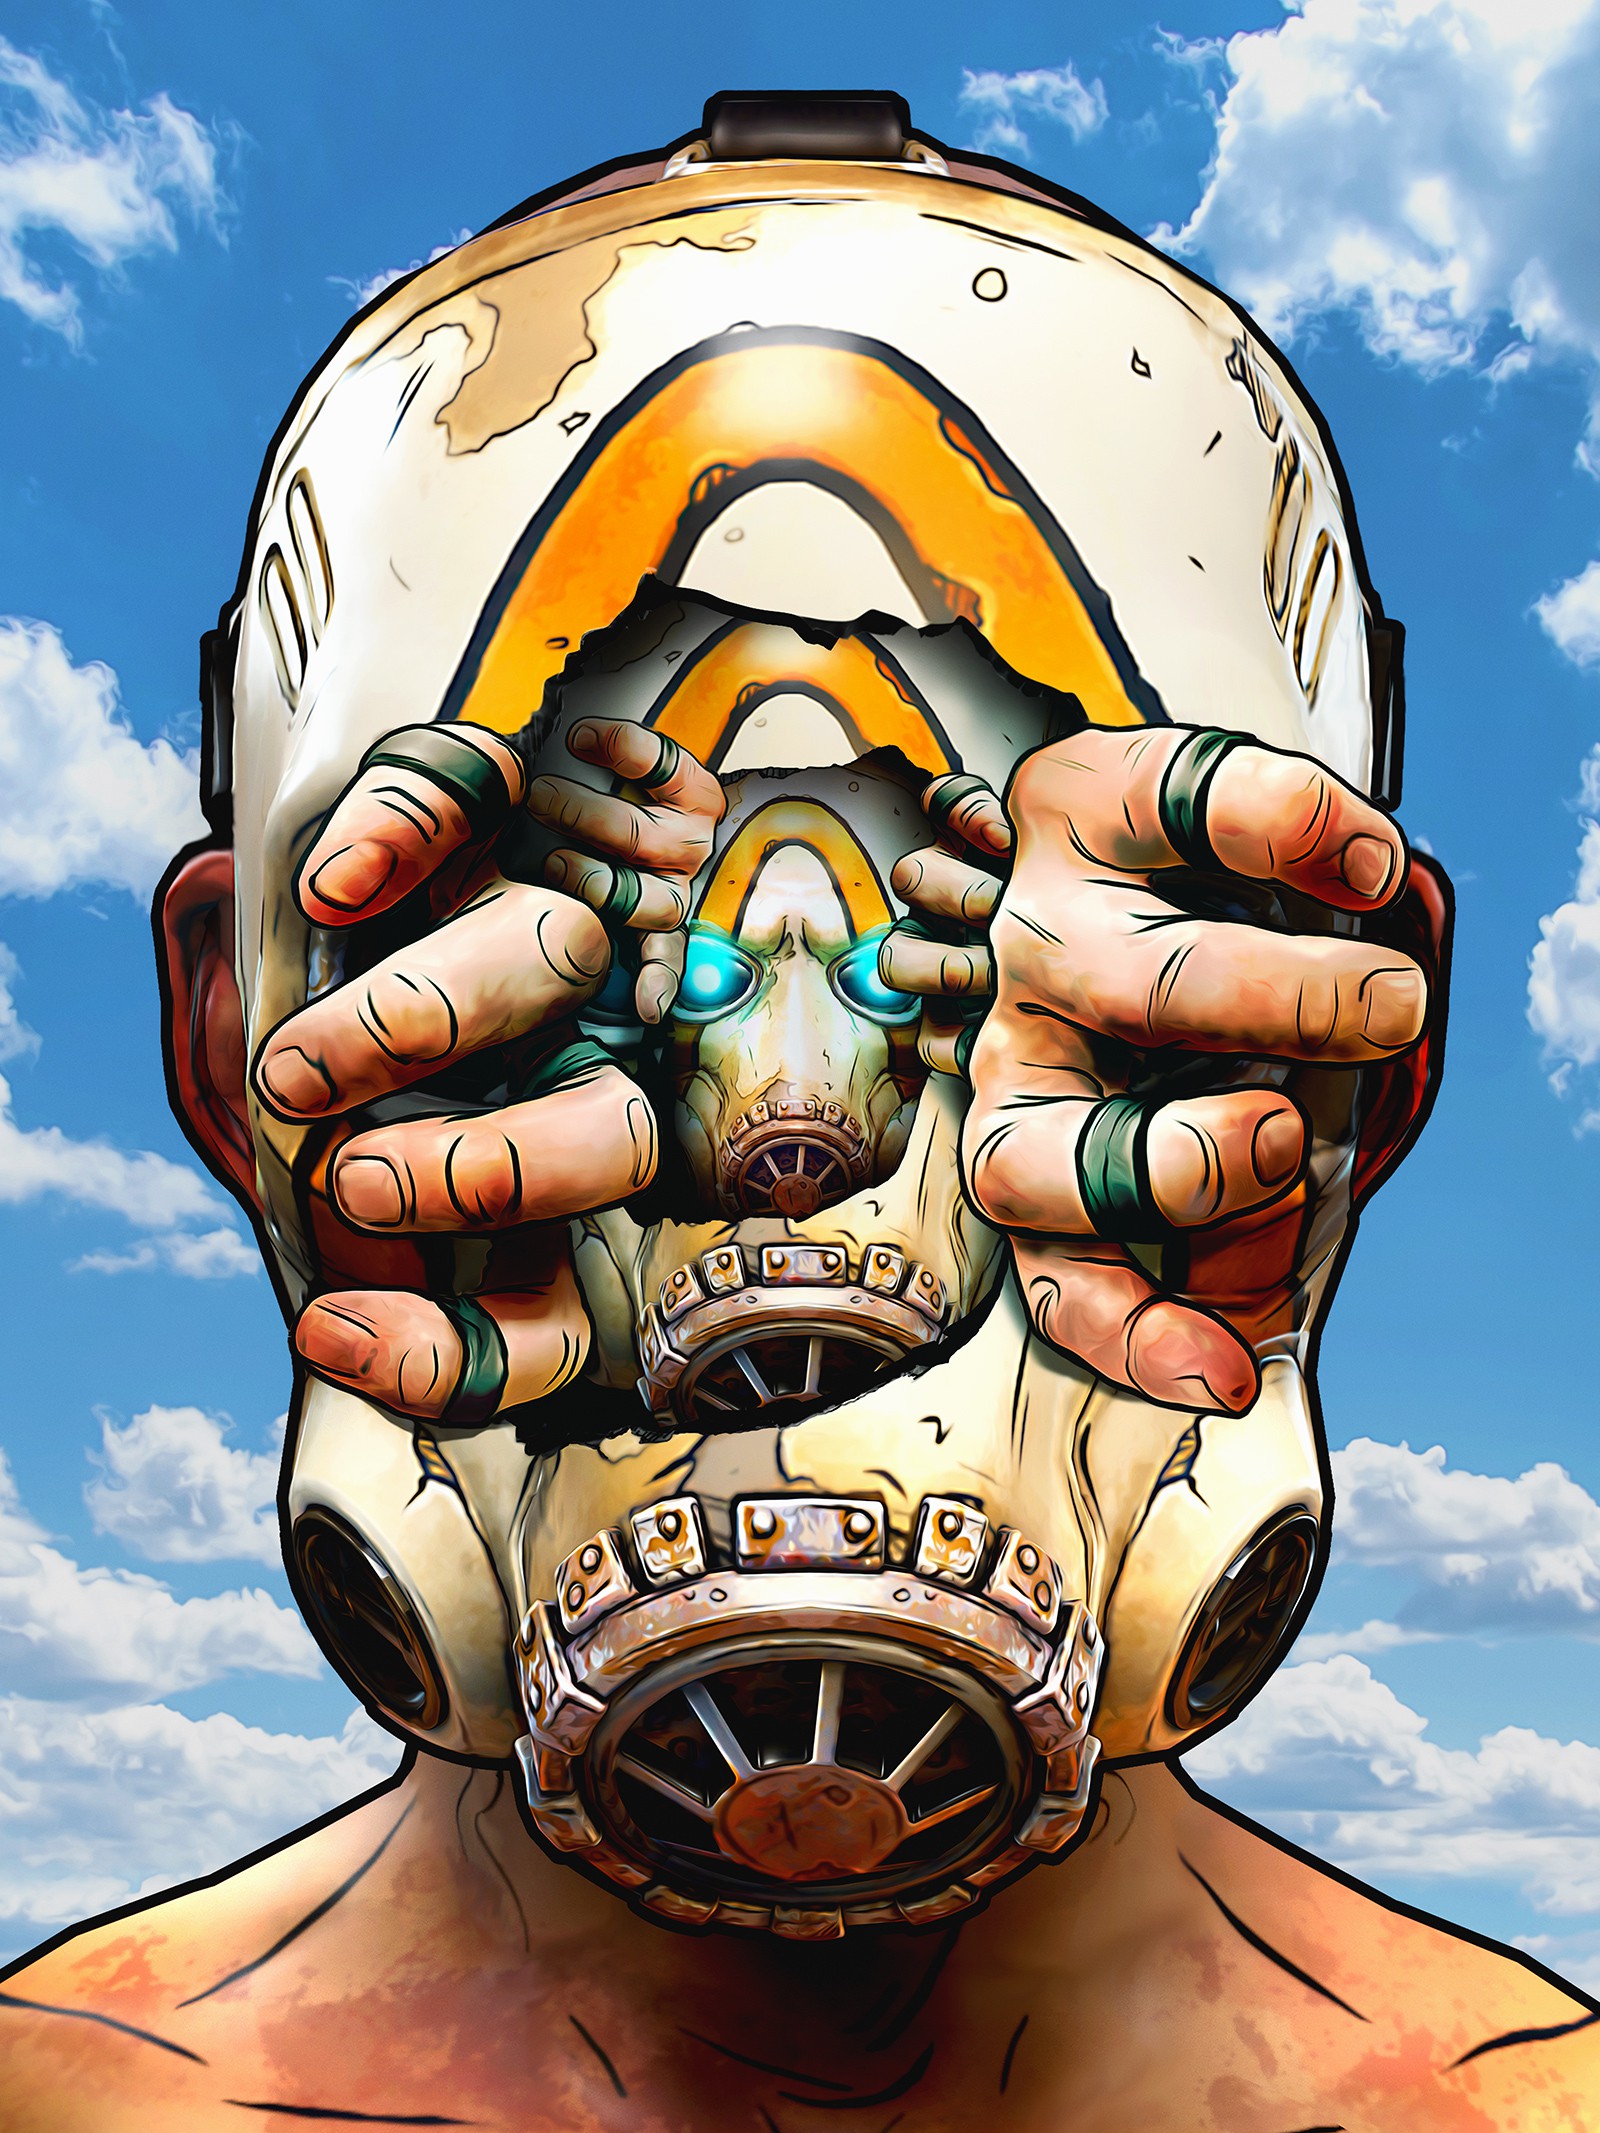 Artwork Surreal Psycho Bandit | Borderlands 3 | Gearbox Software | Cook